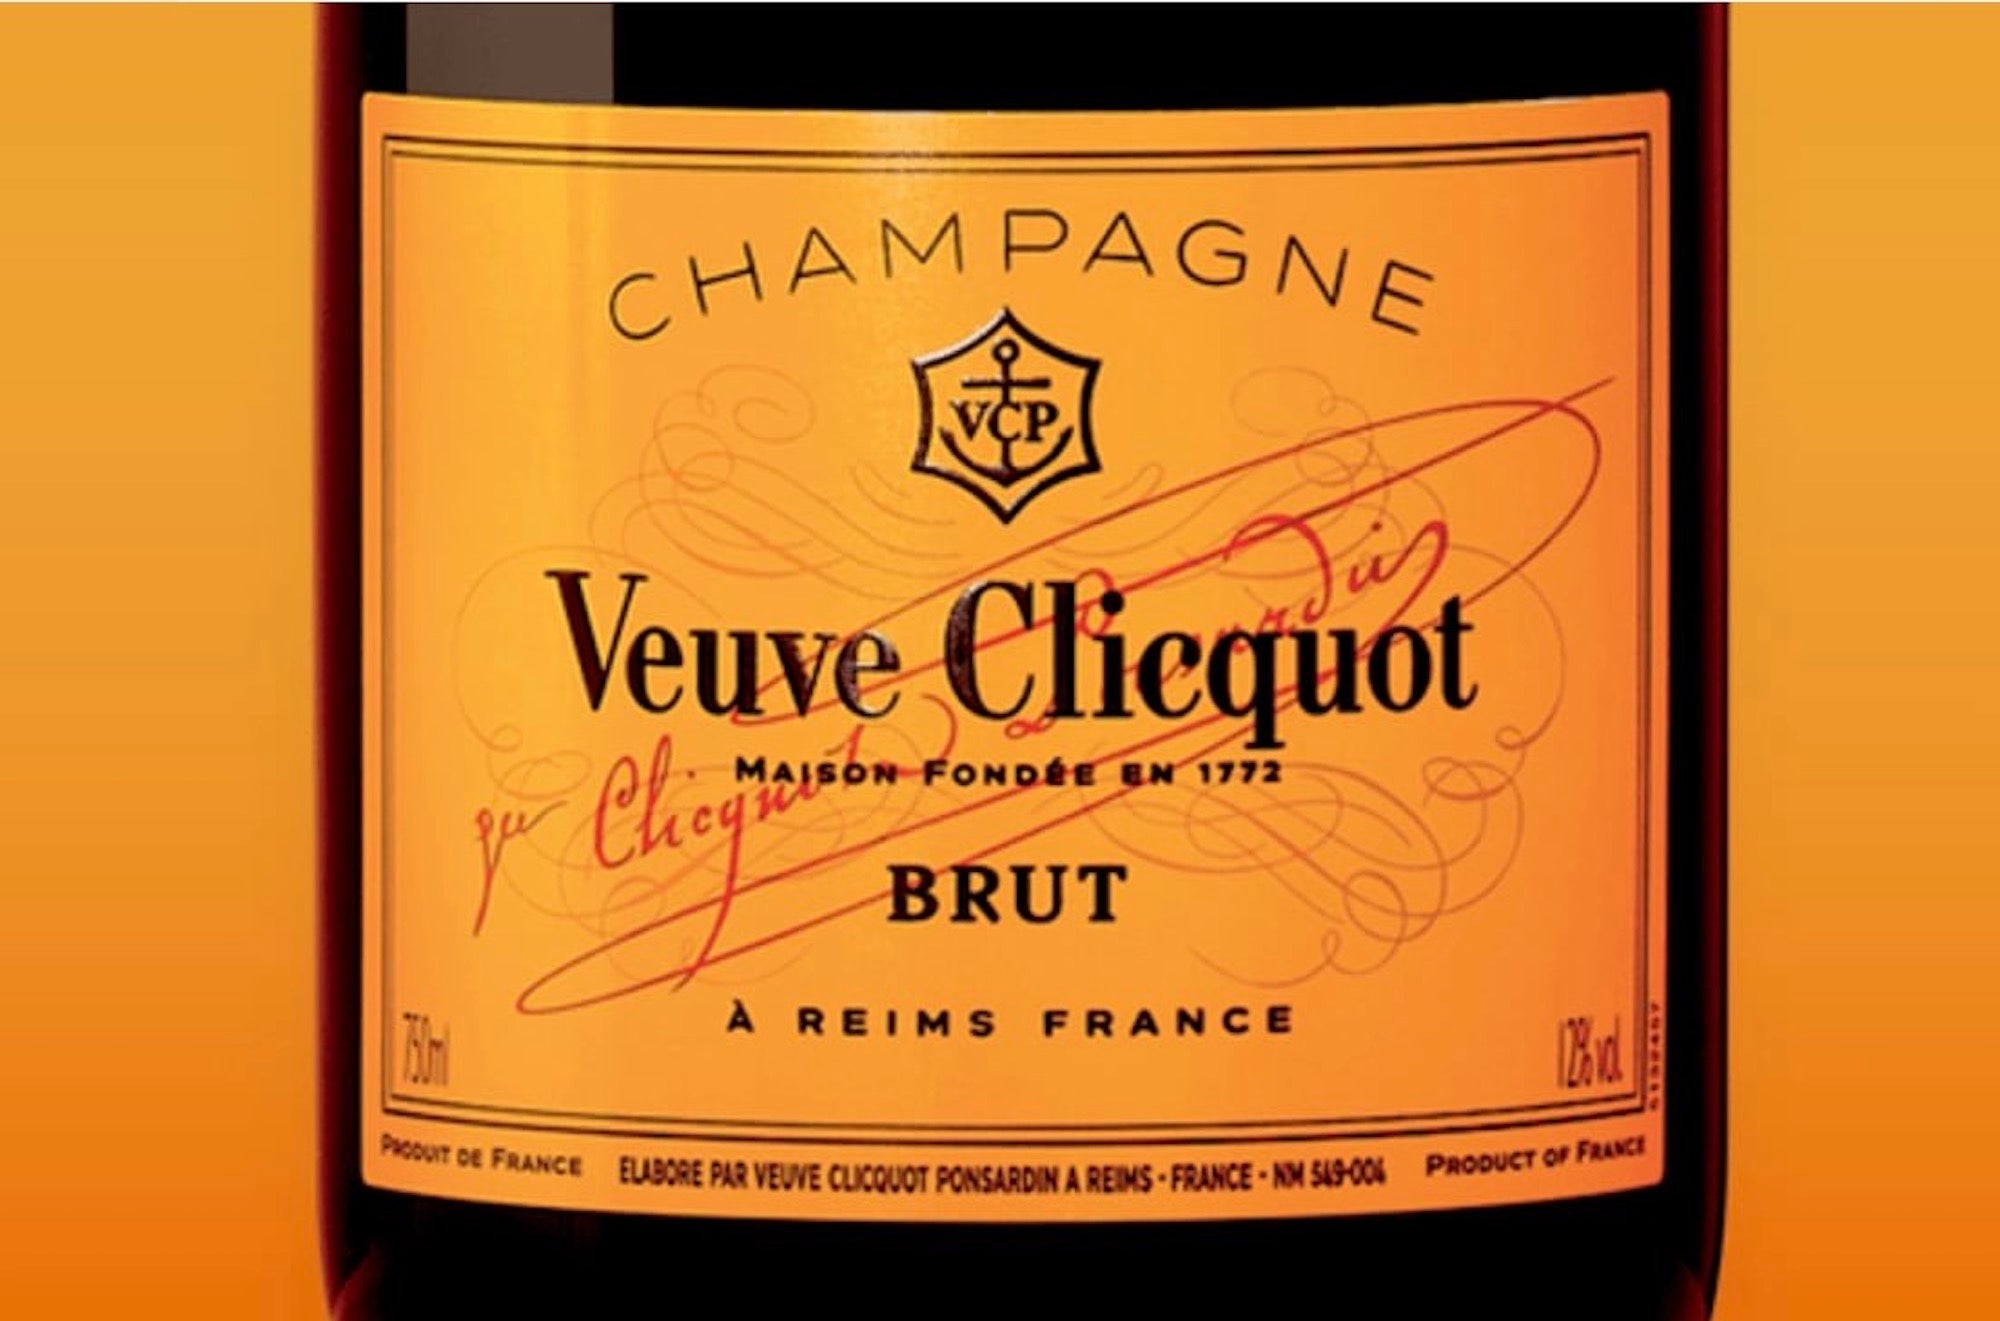 Veuve Clicquot Brut Yellow Label